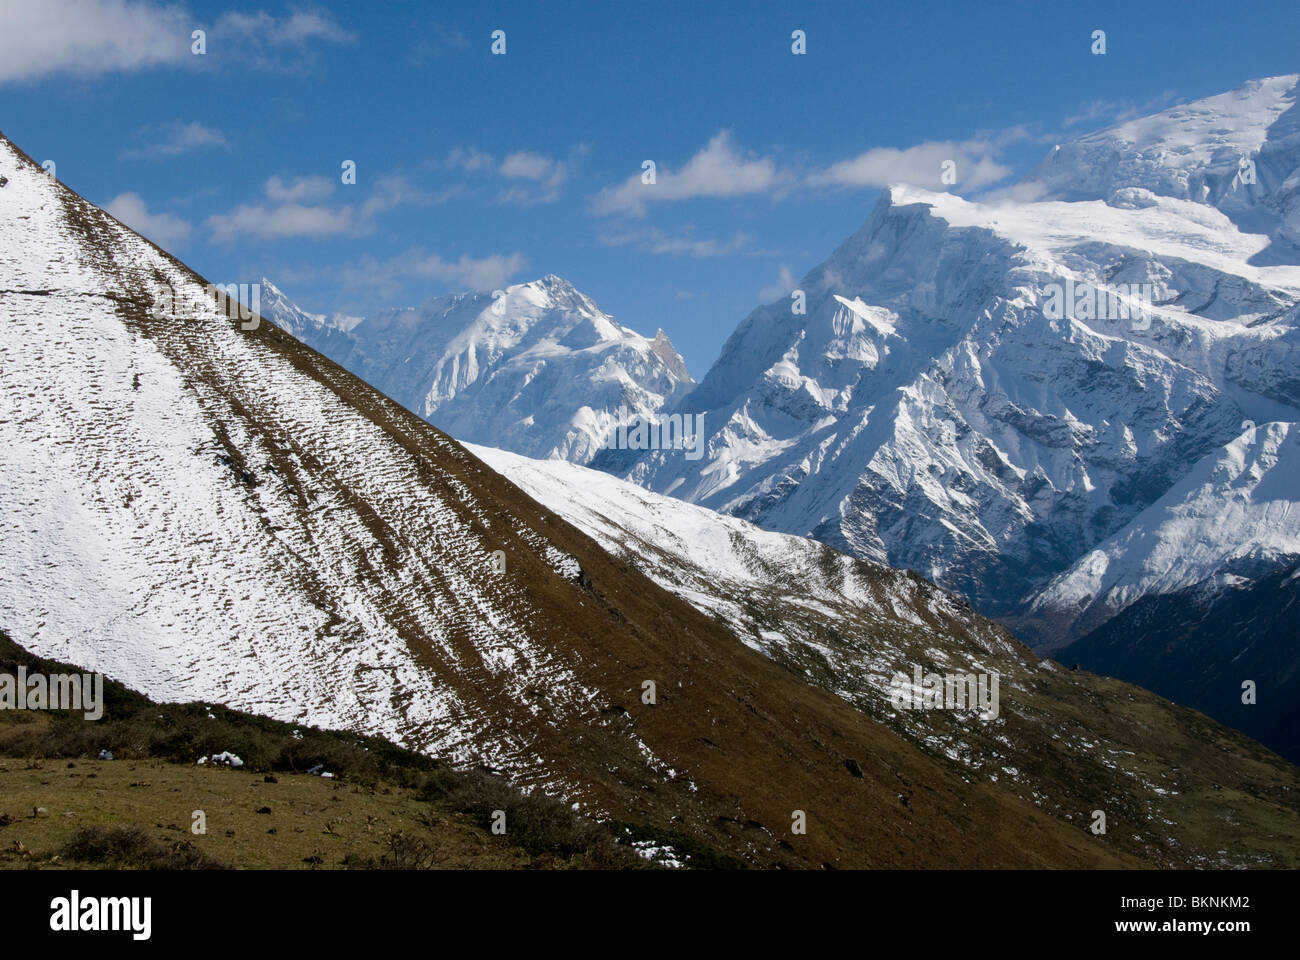 Snow clad mountains and high meadows, Yak Kharta, near Manang, Annapurna Circuit, Nepal Stock Photo